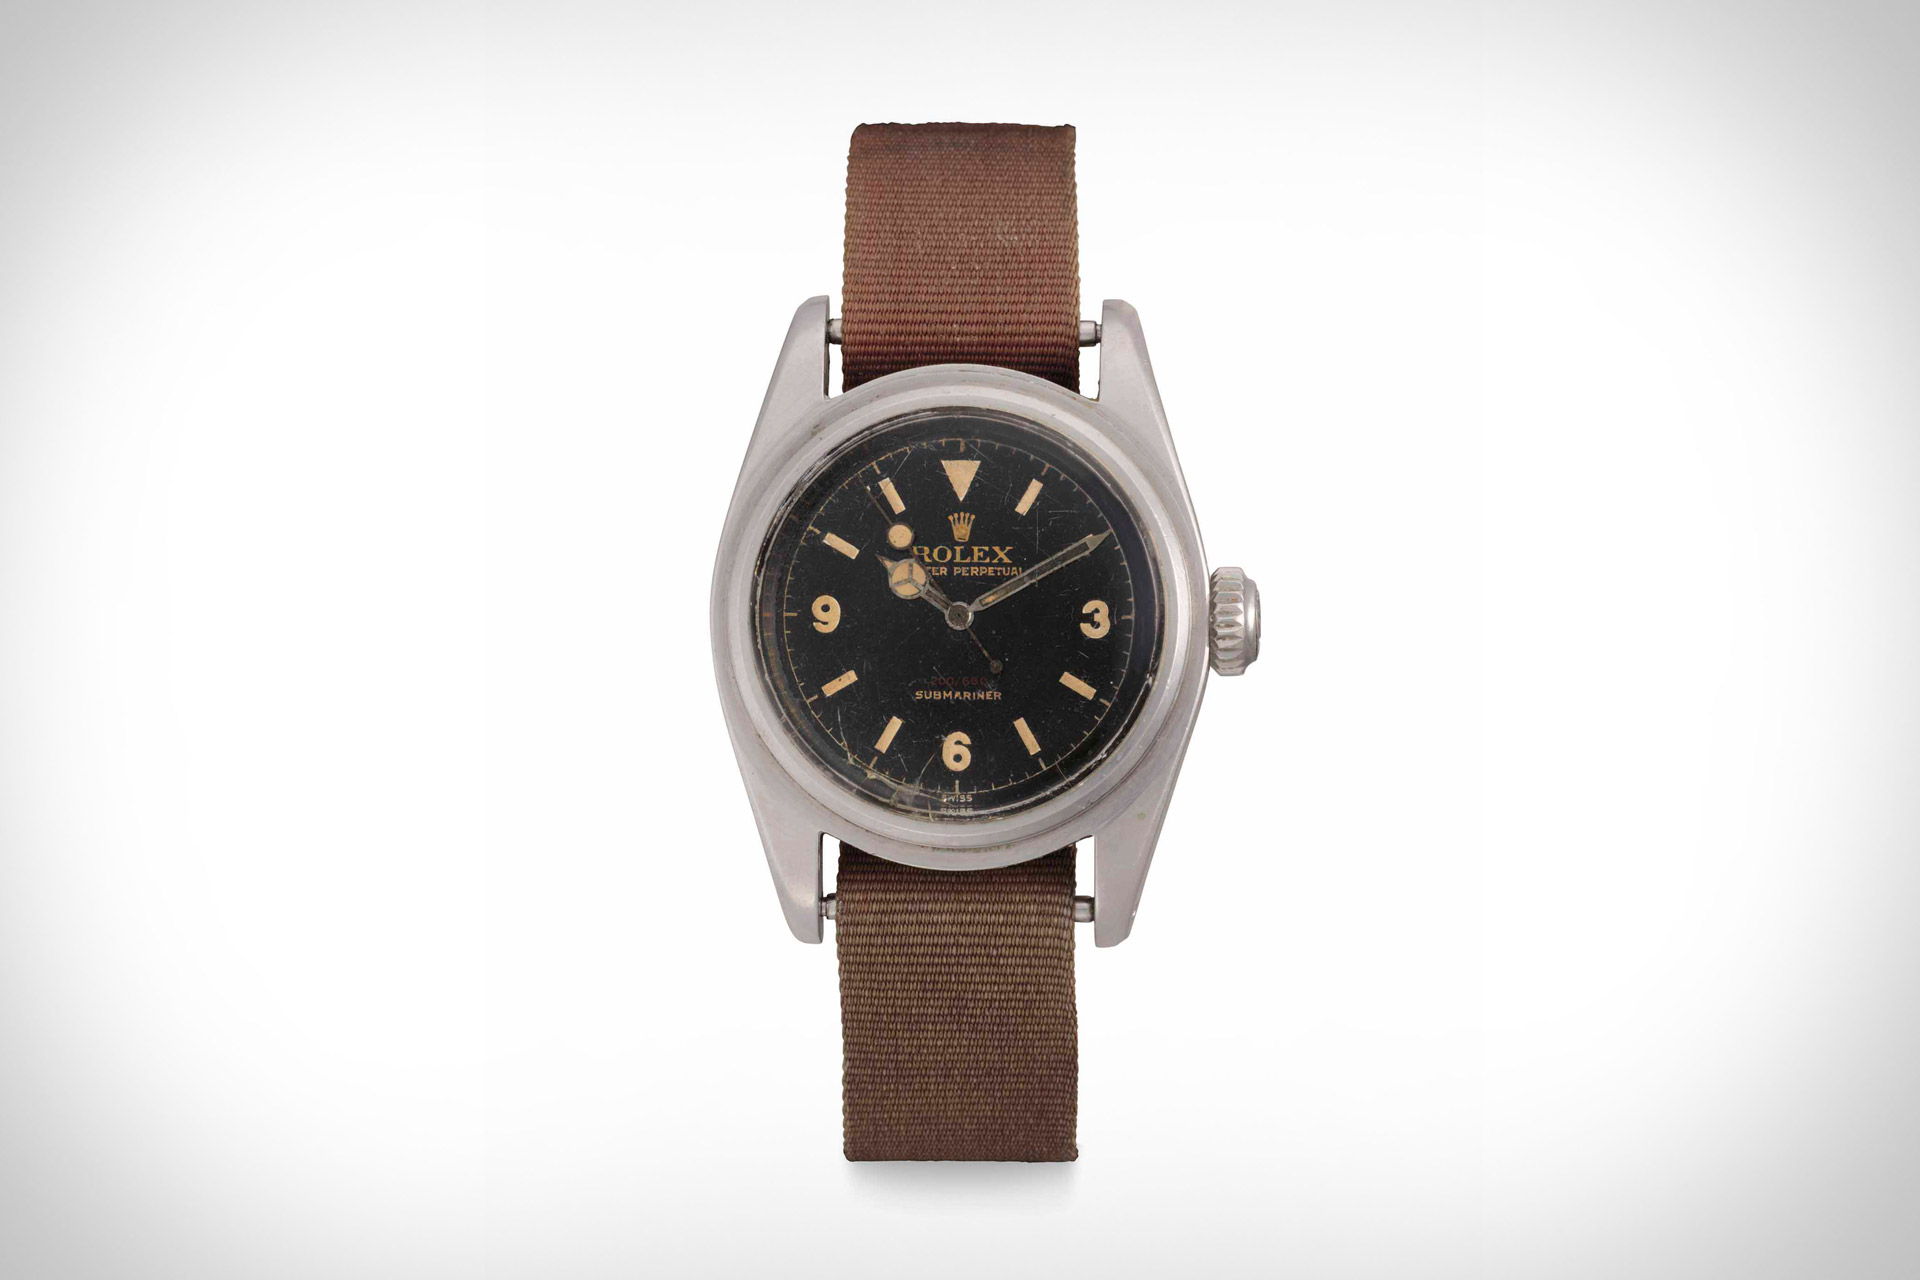 Часы Rolex Submariner за 1 миллион долларов